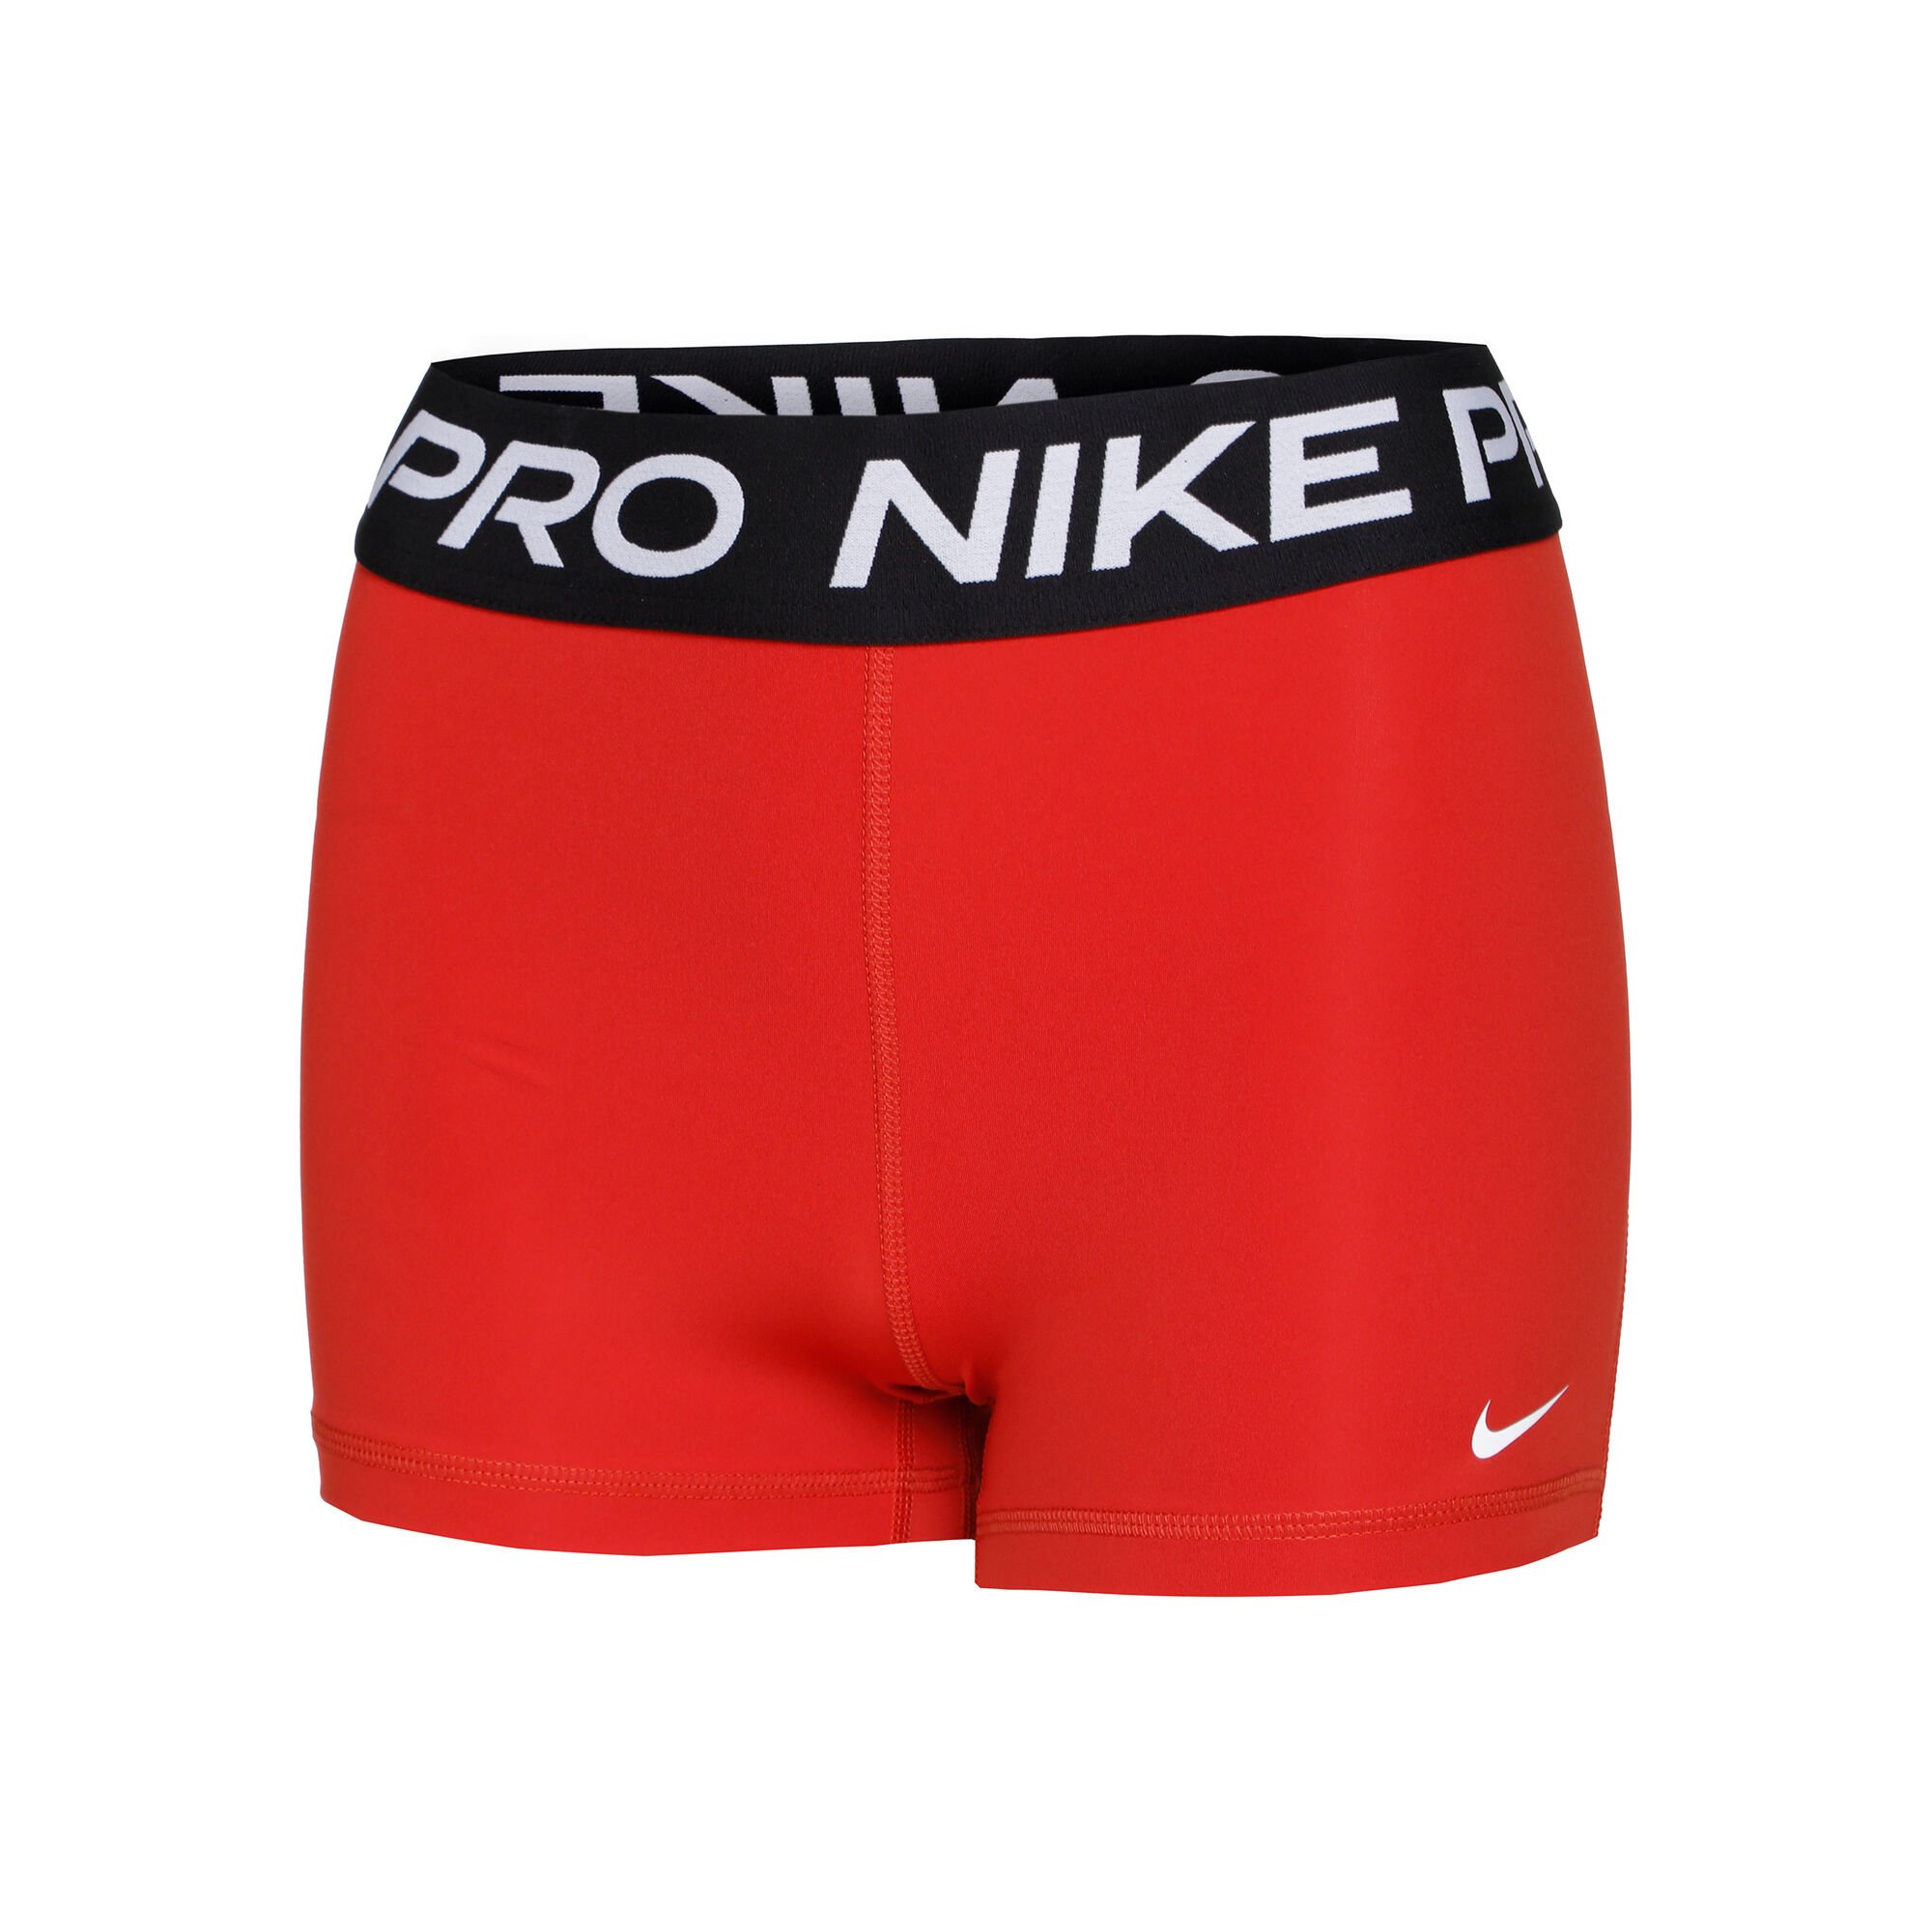 Shop Shorts Girl Nike online